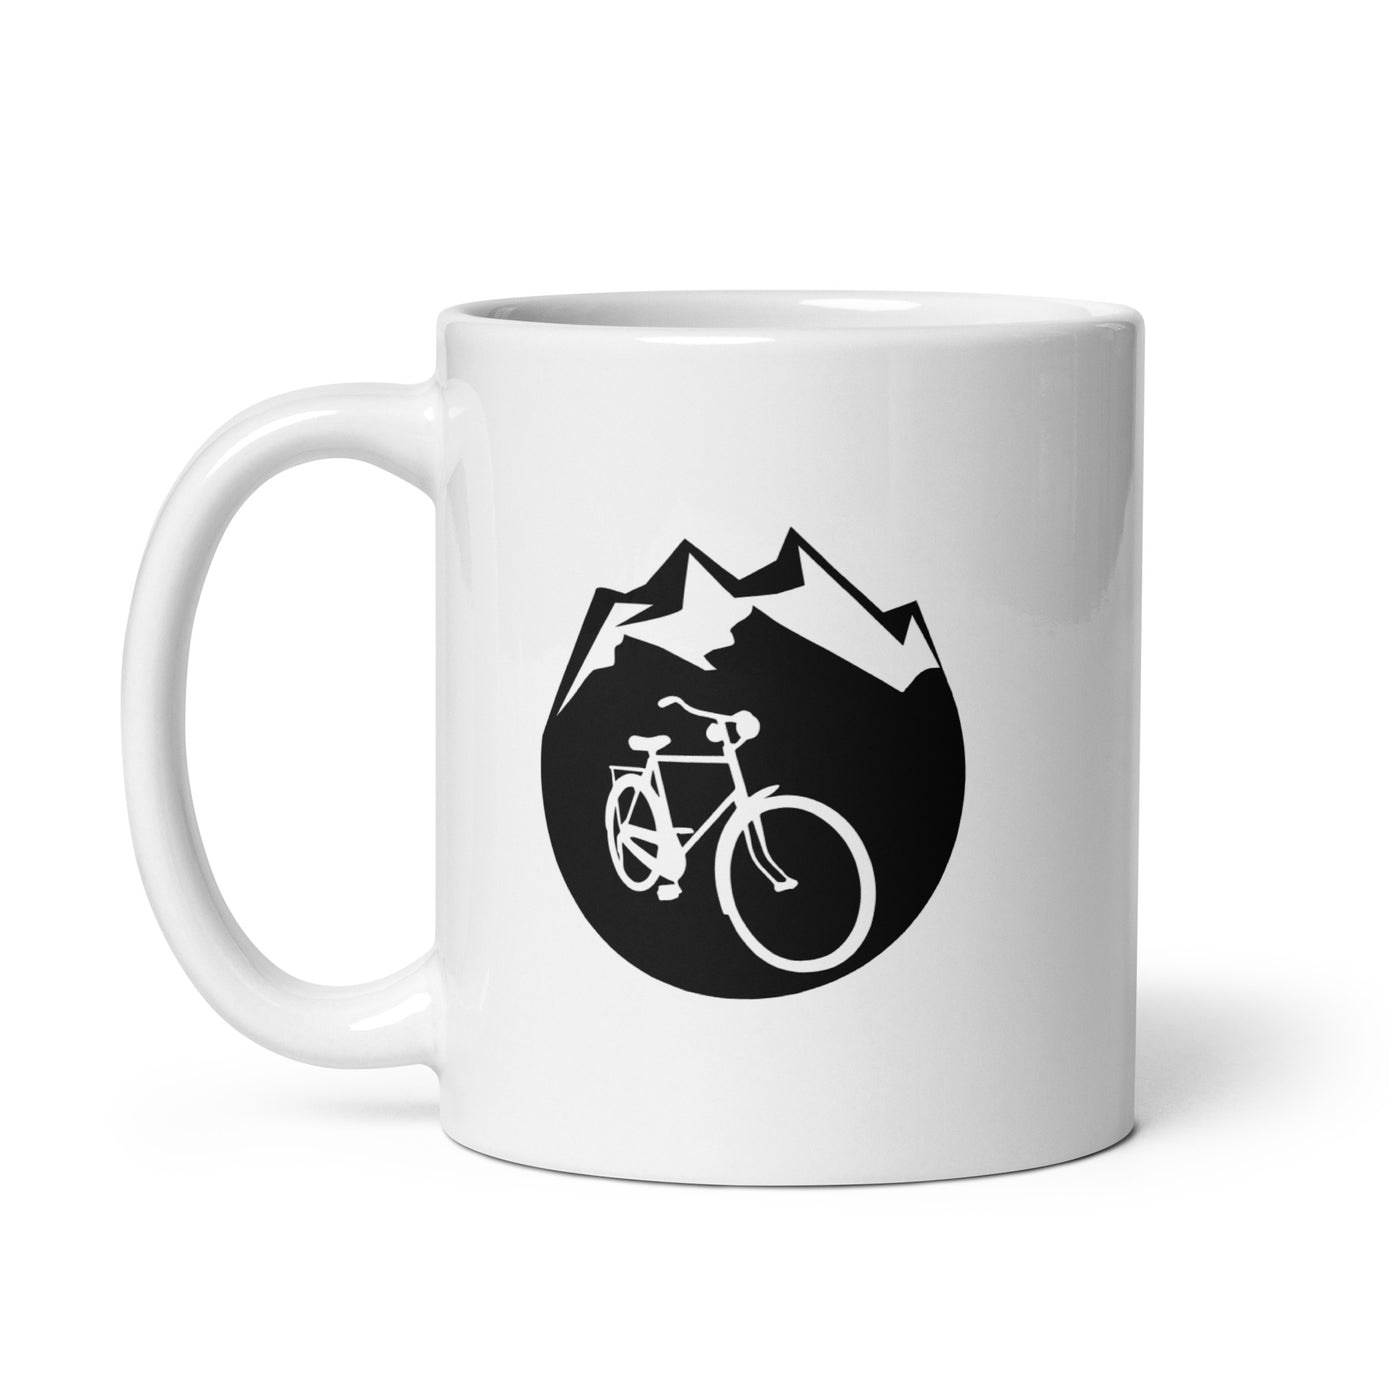 Circle - Mountain - Cycling - Tasse fahrrad 11oz